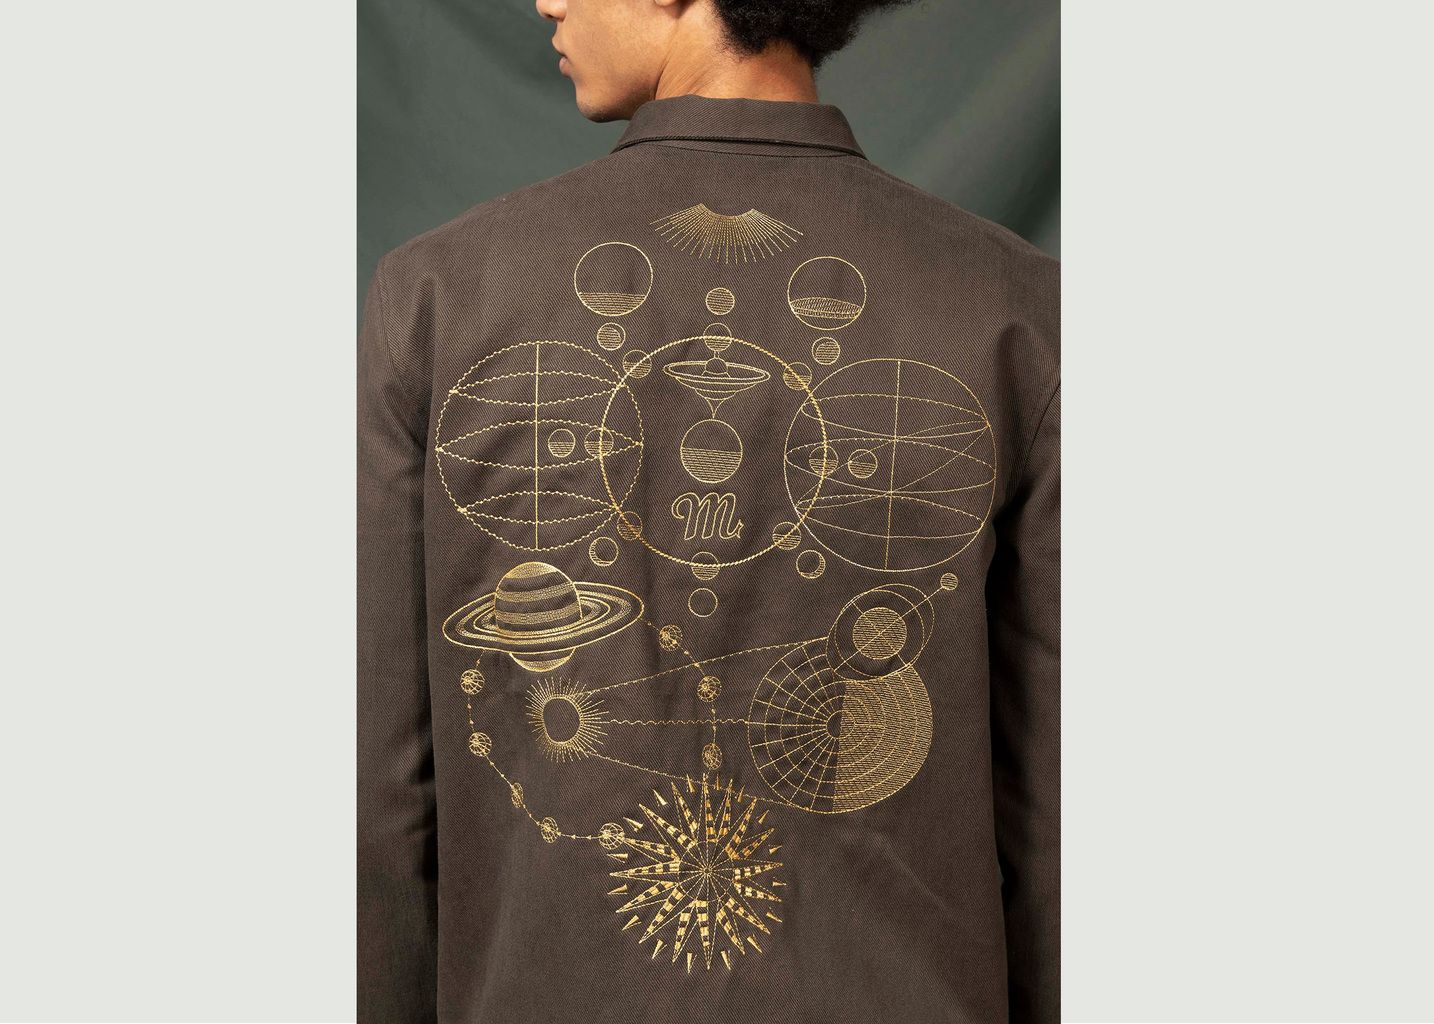 Lunar system embroidery overshirt - Misericordia